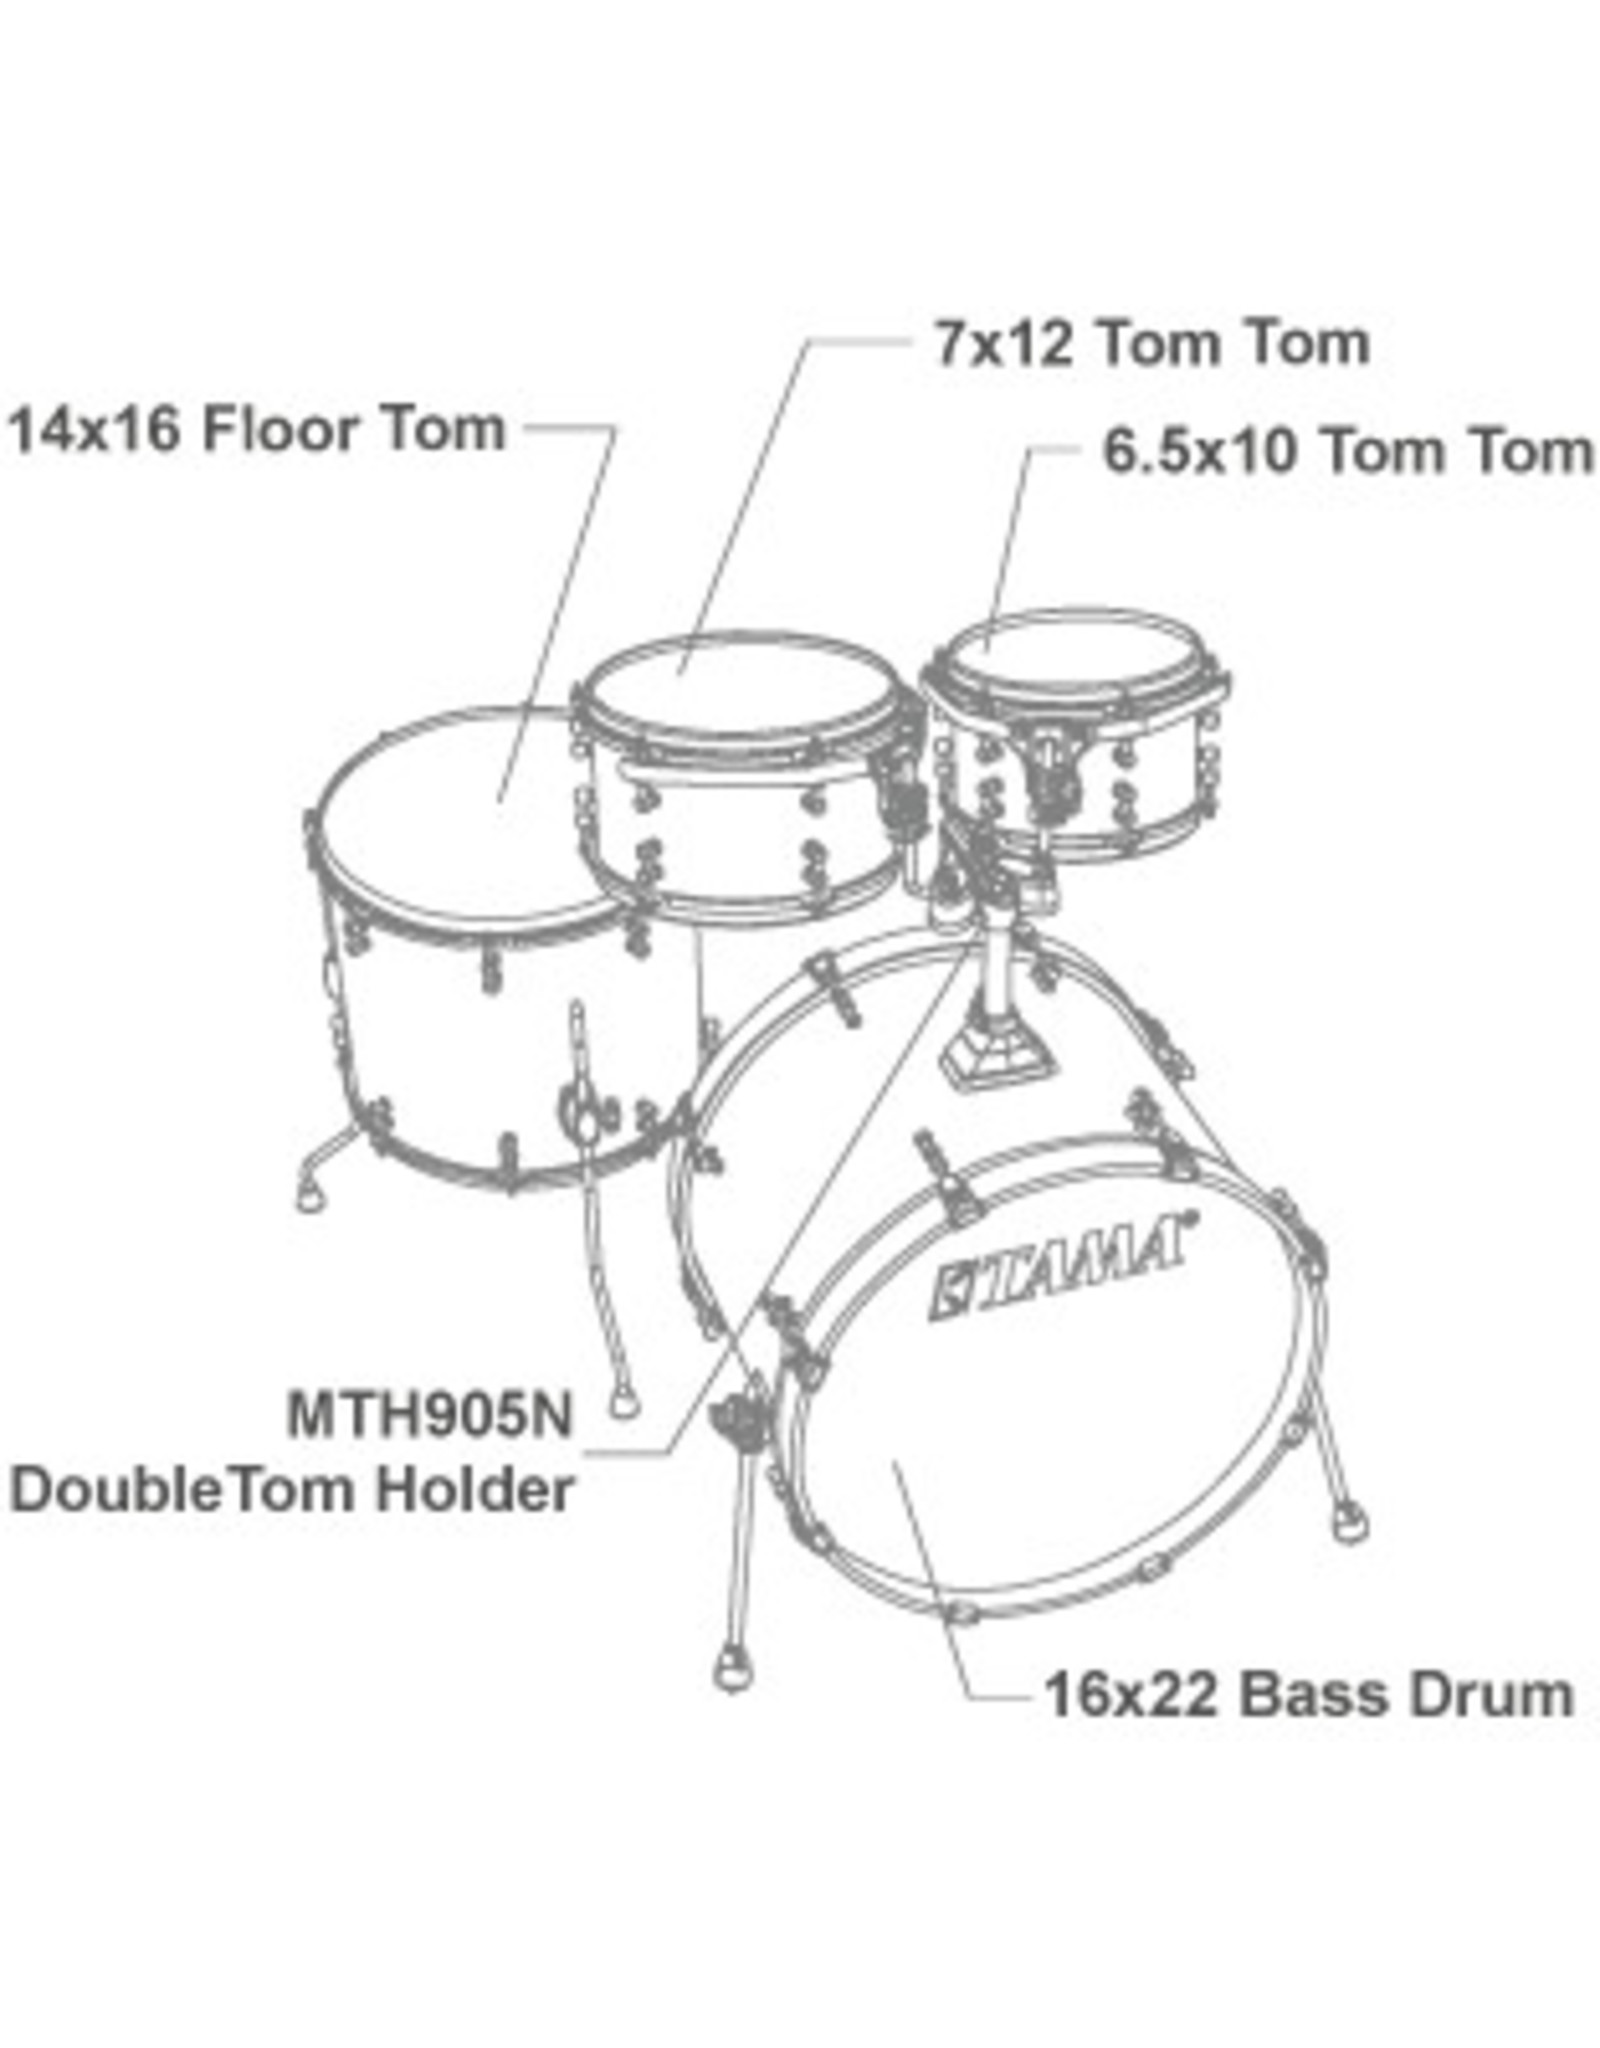 Tama LKP52HTS-GKP SLP Dynamic Kapur 5-piece shell set drumset